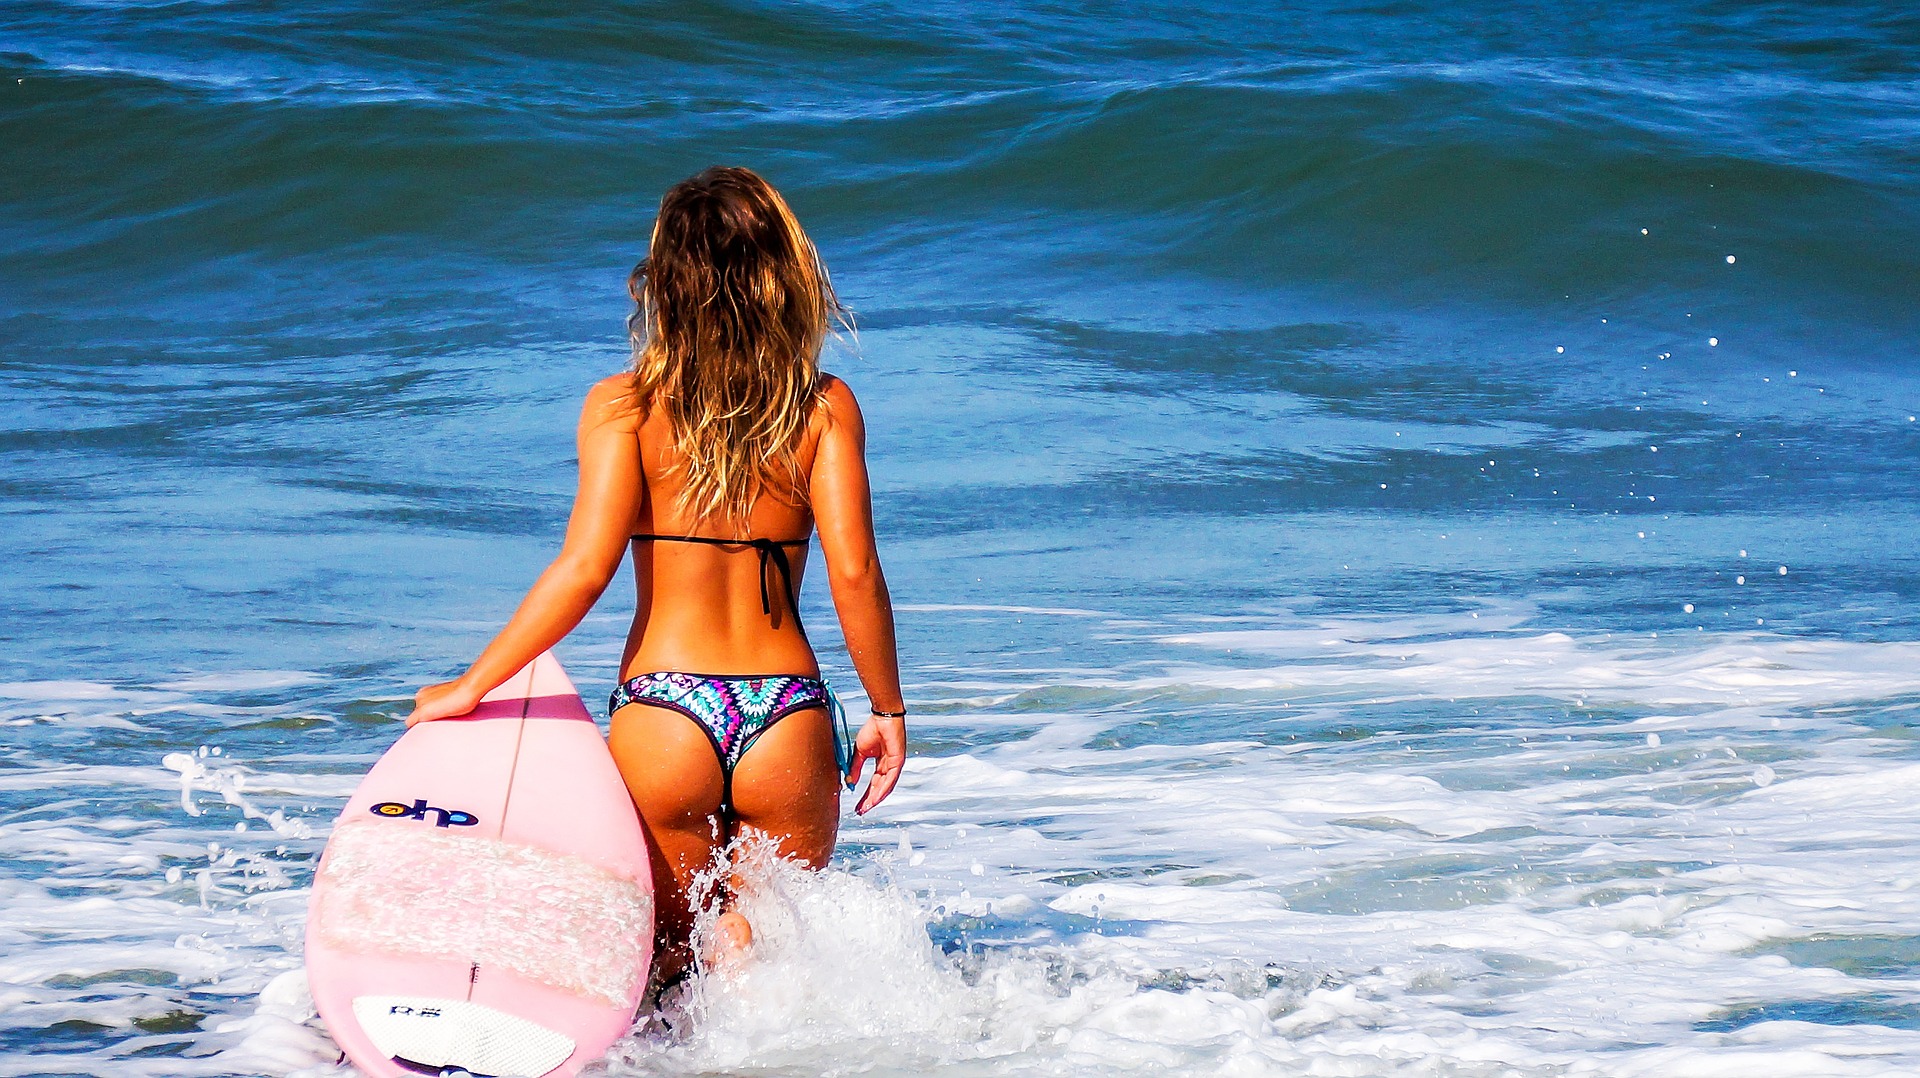 Surf Woman Mar Surfer Wave Tranquility Sol.jpg